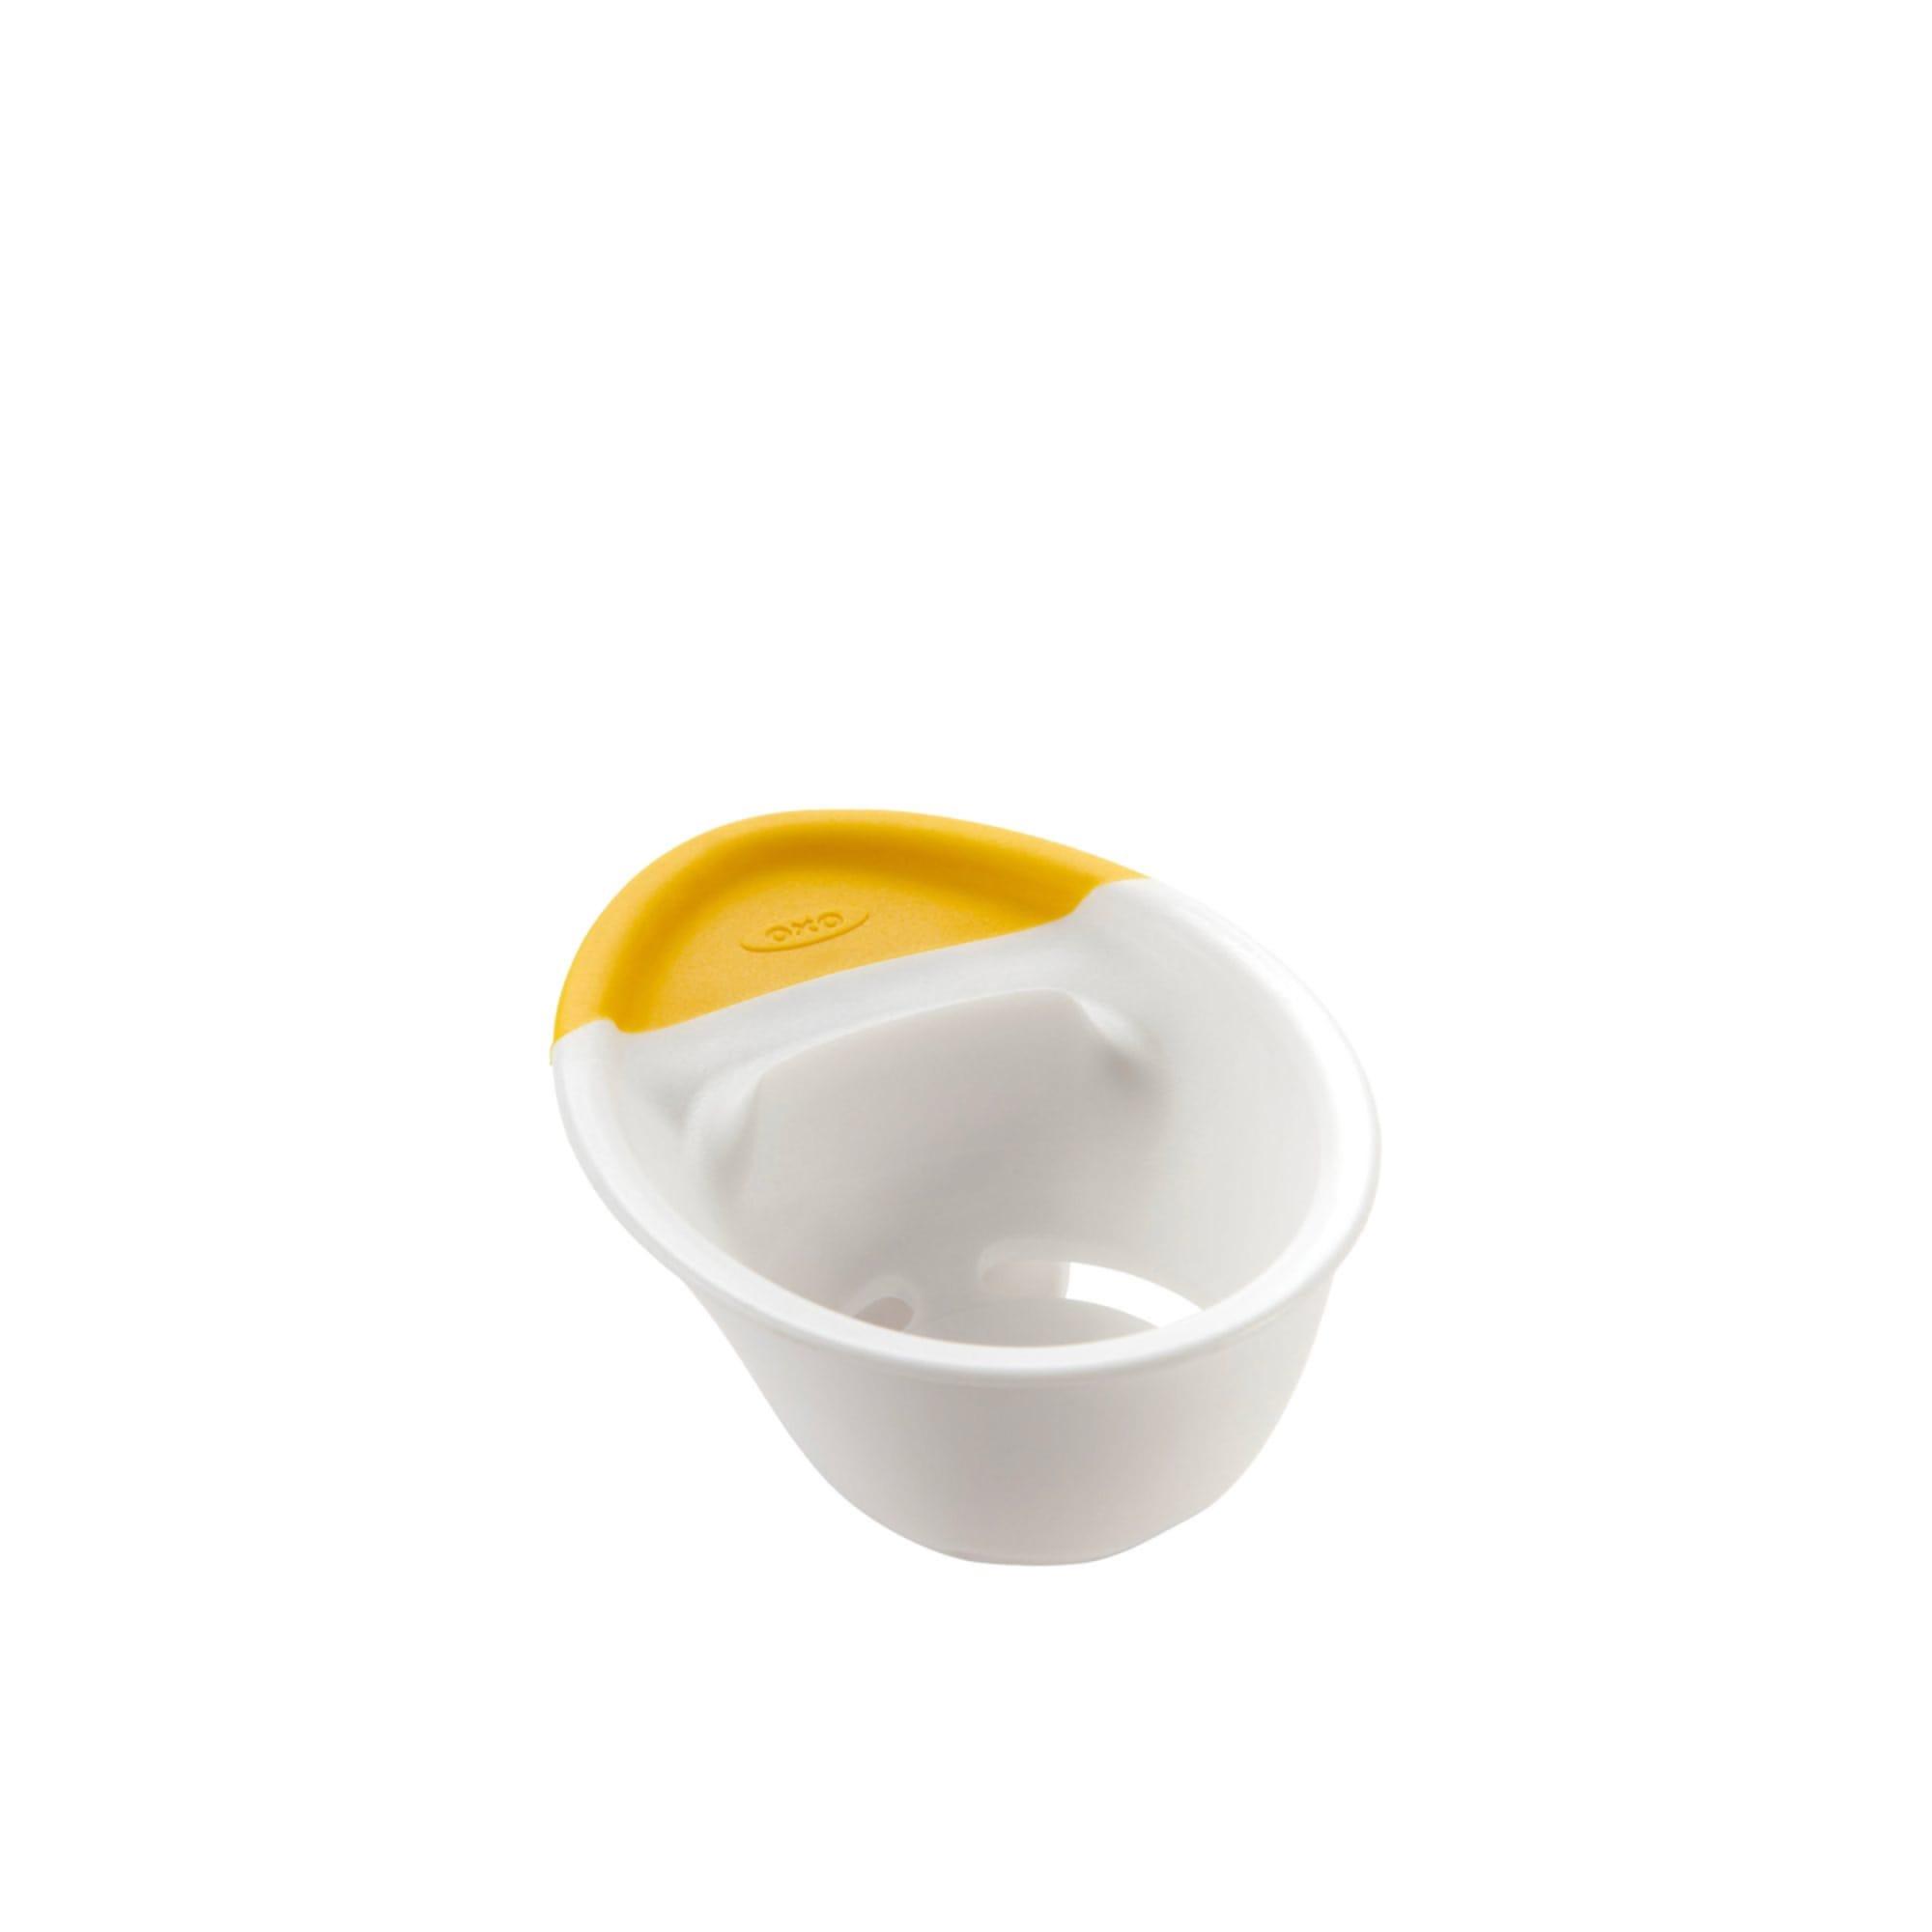 OXO Good Grips 3 in 1 Egg Separator Image 1